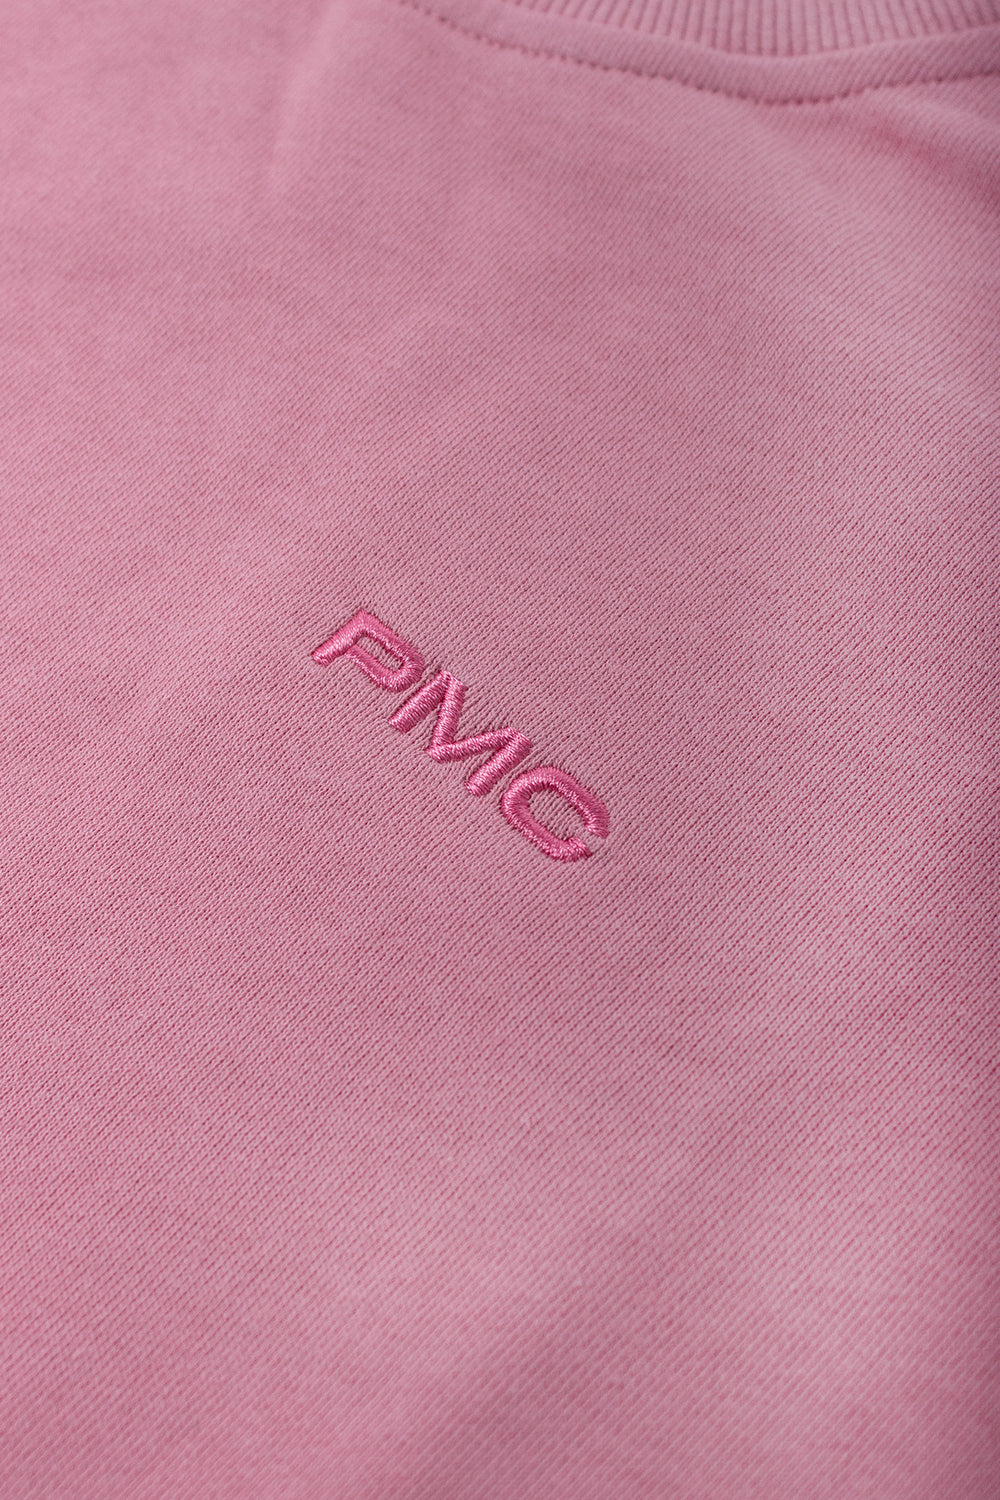 PMC | Prime Statement Crewneck Sweater Dusty Pink